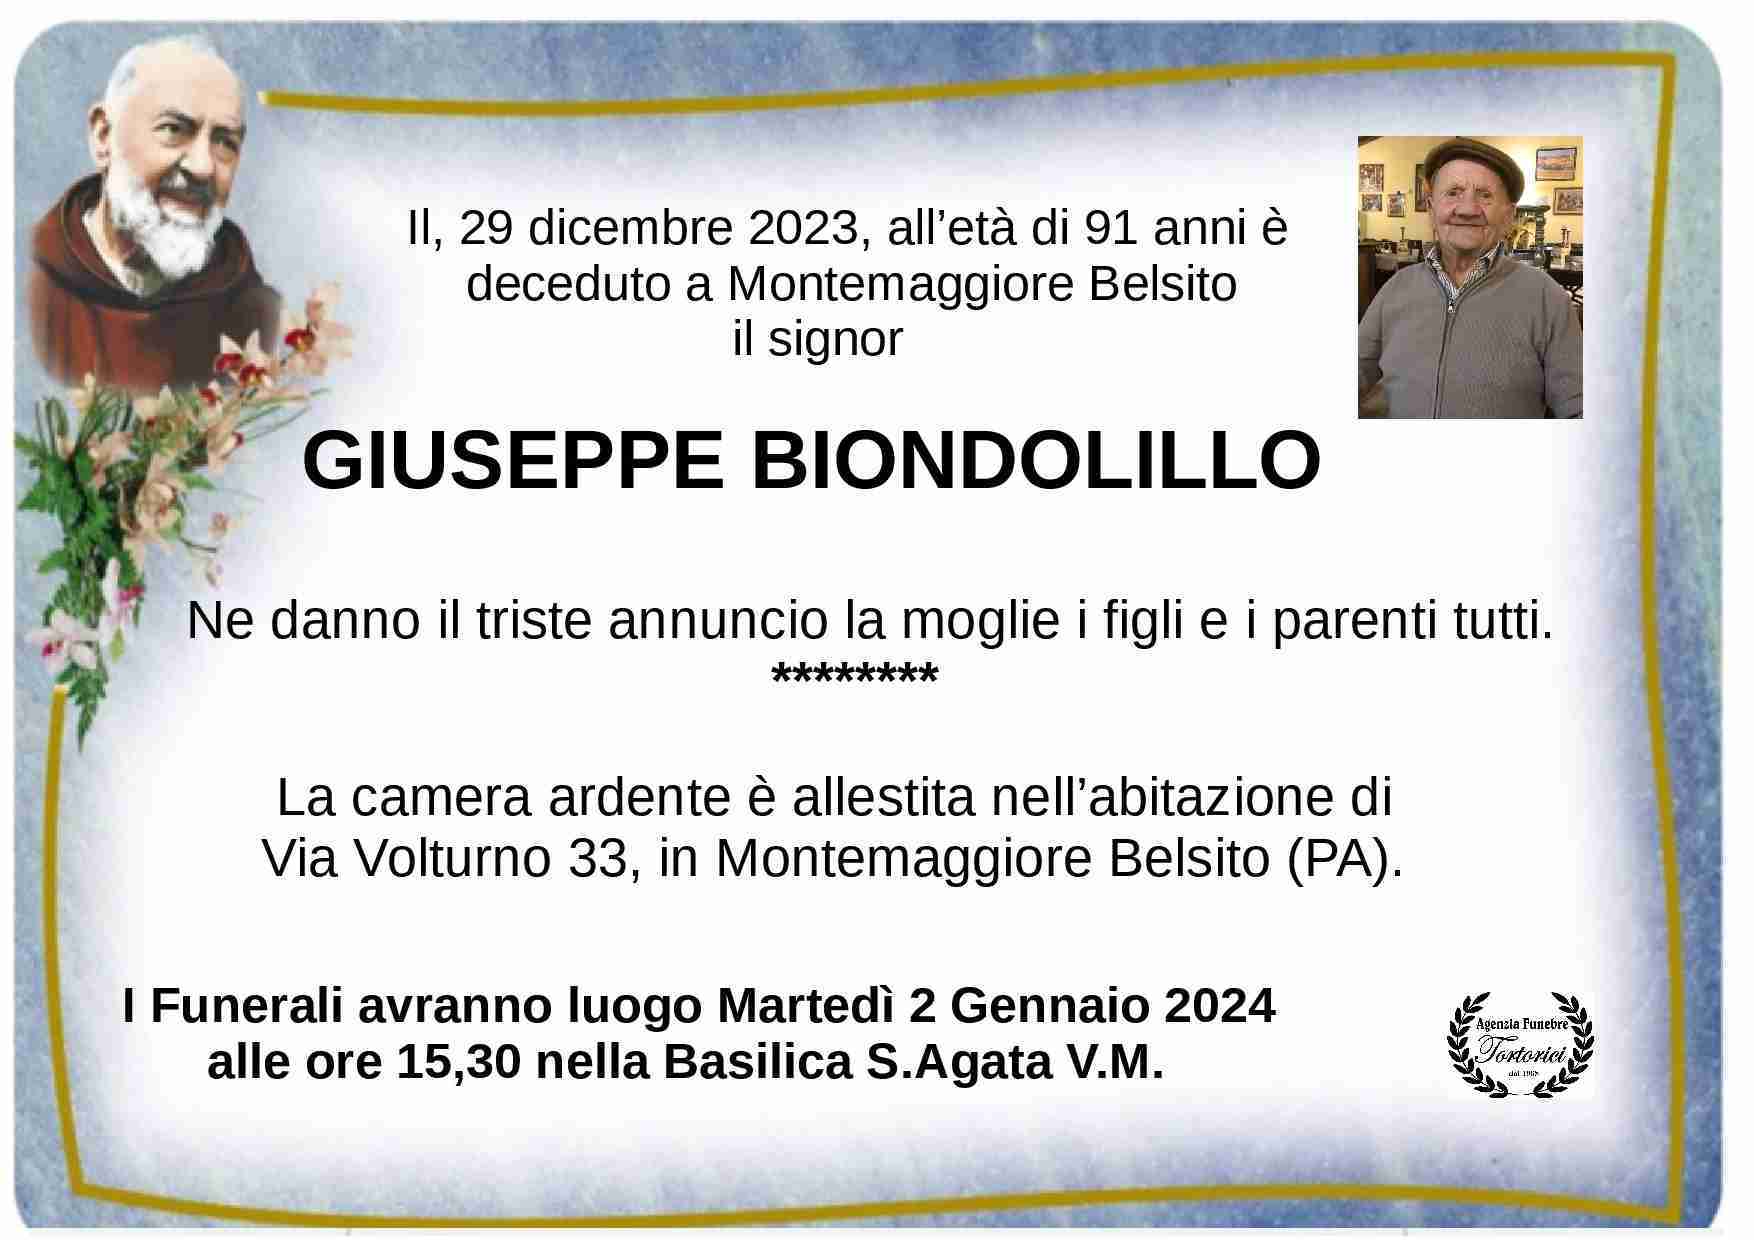 Giuseppe Biondolillo